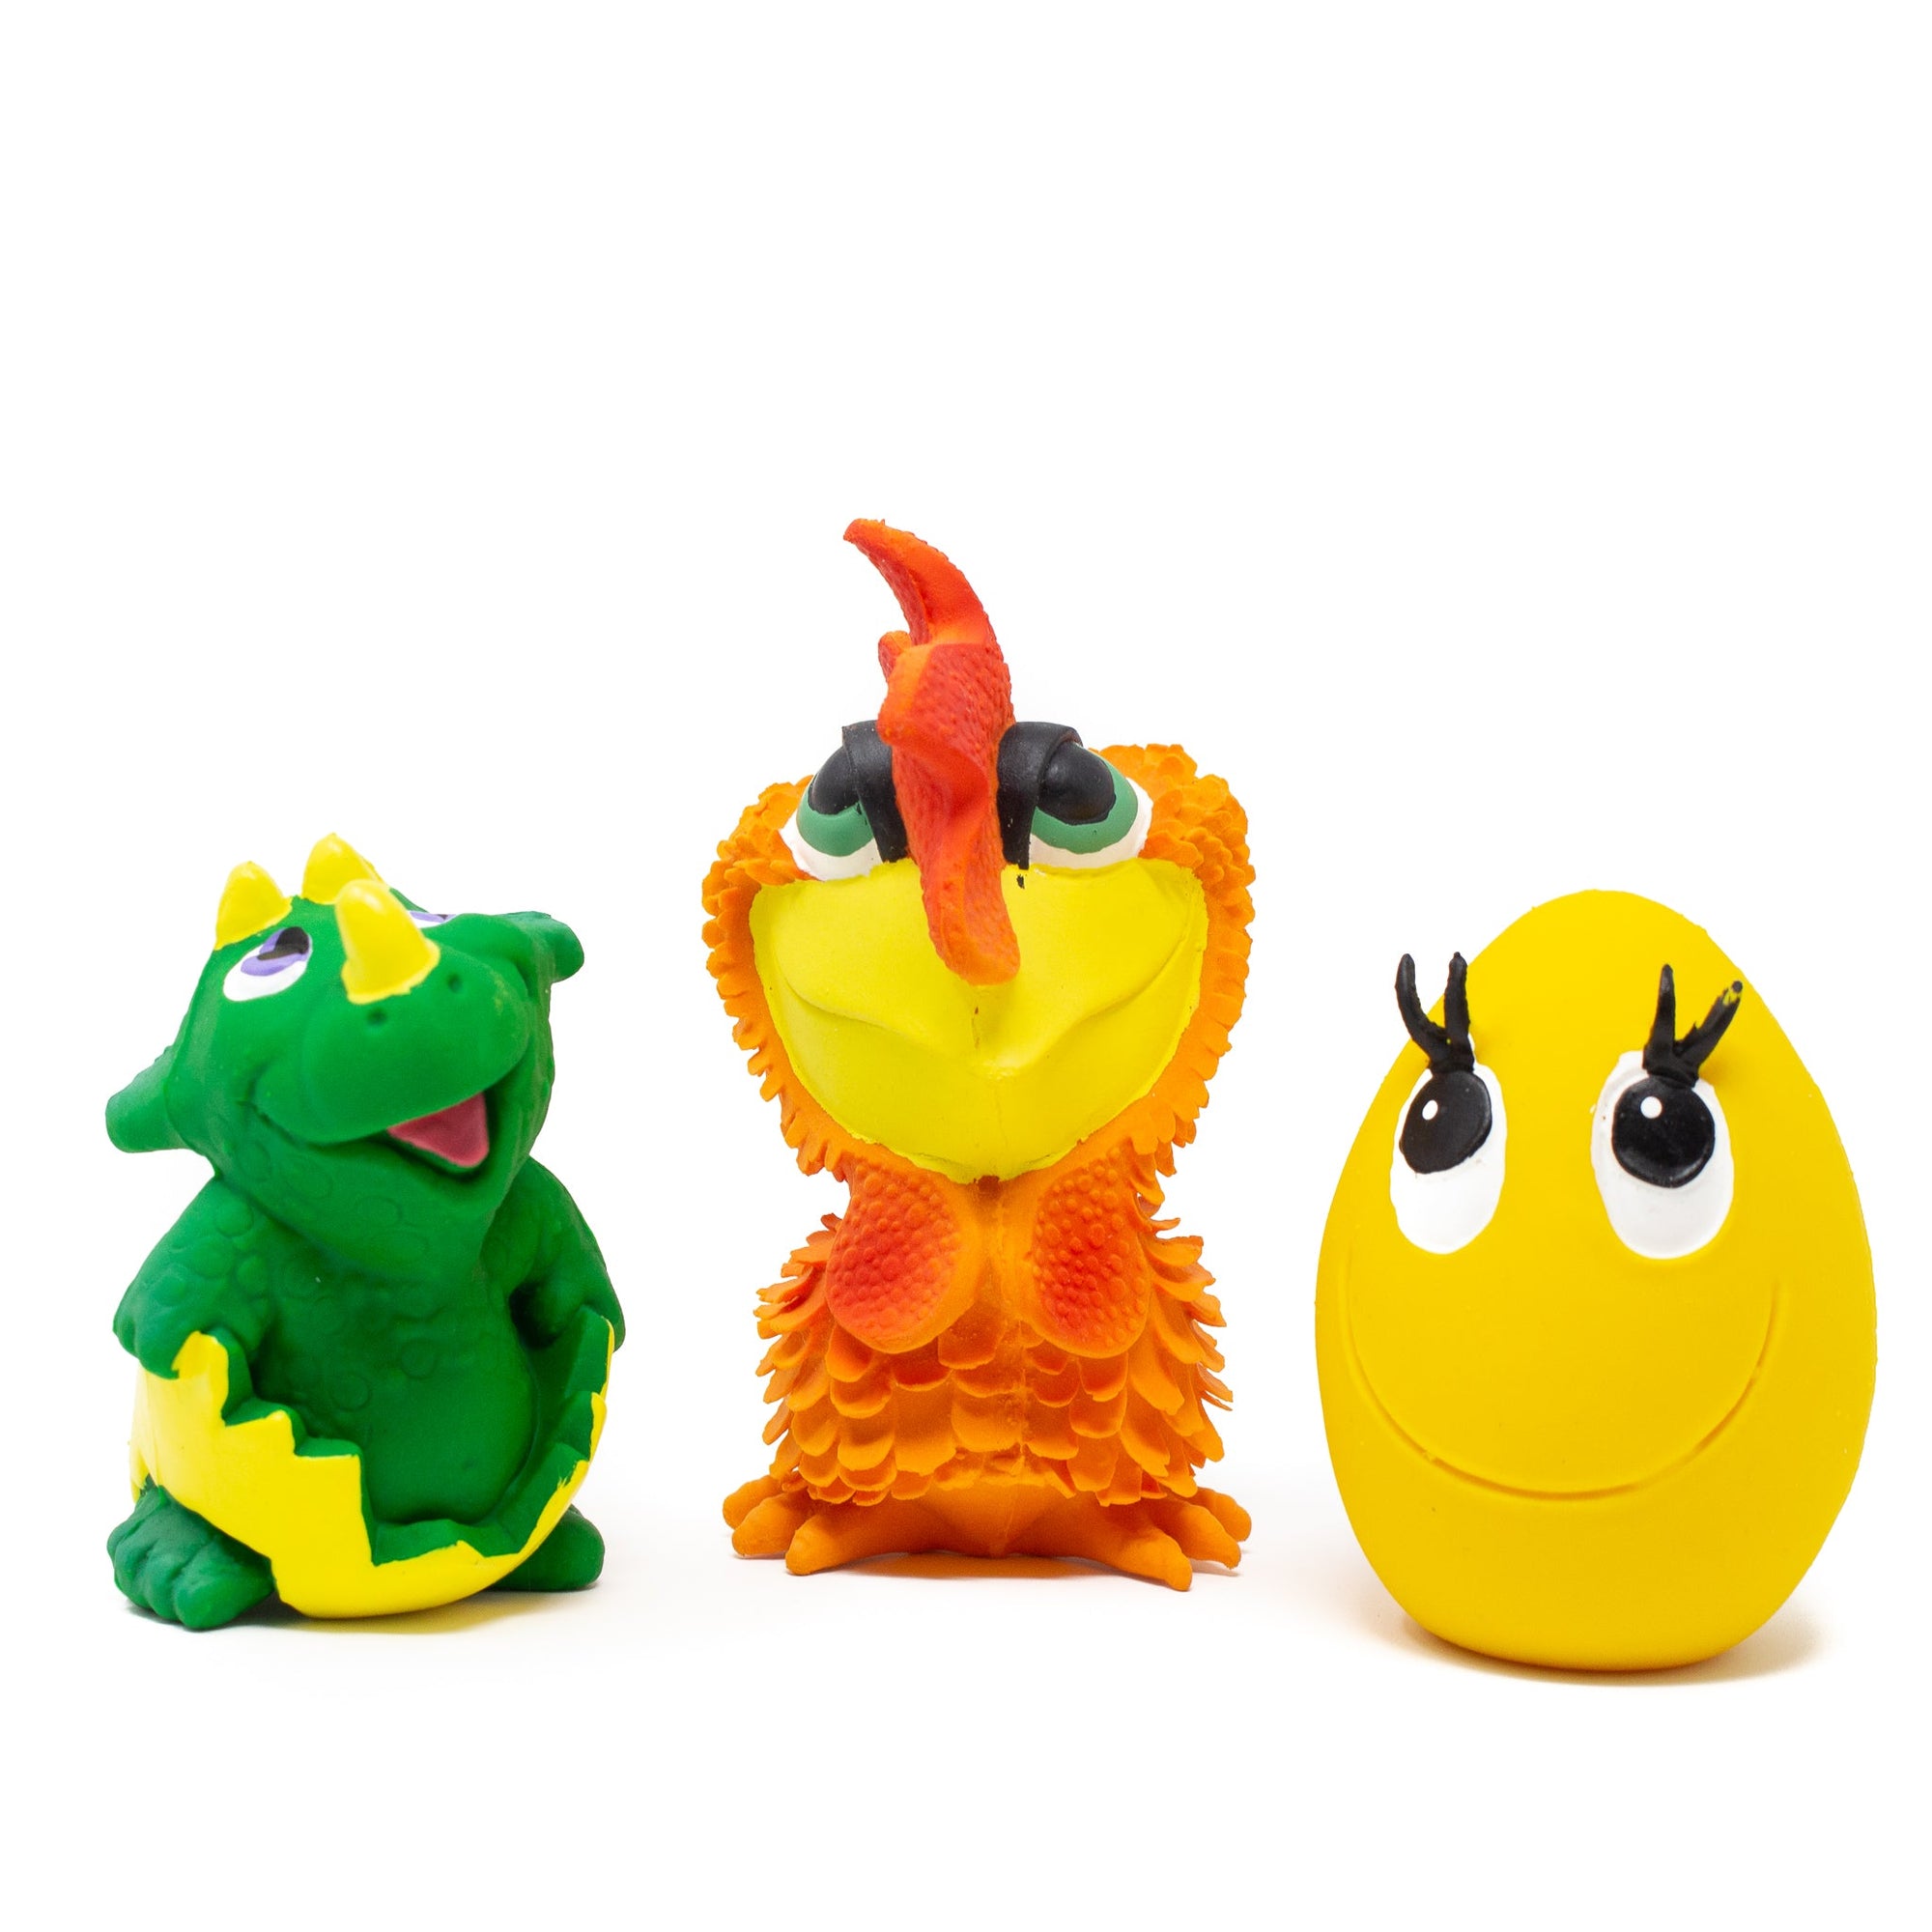 XL Egg, Cockerel and Dino in Egg 3-Pet Set - Natural Rubber Toys